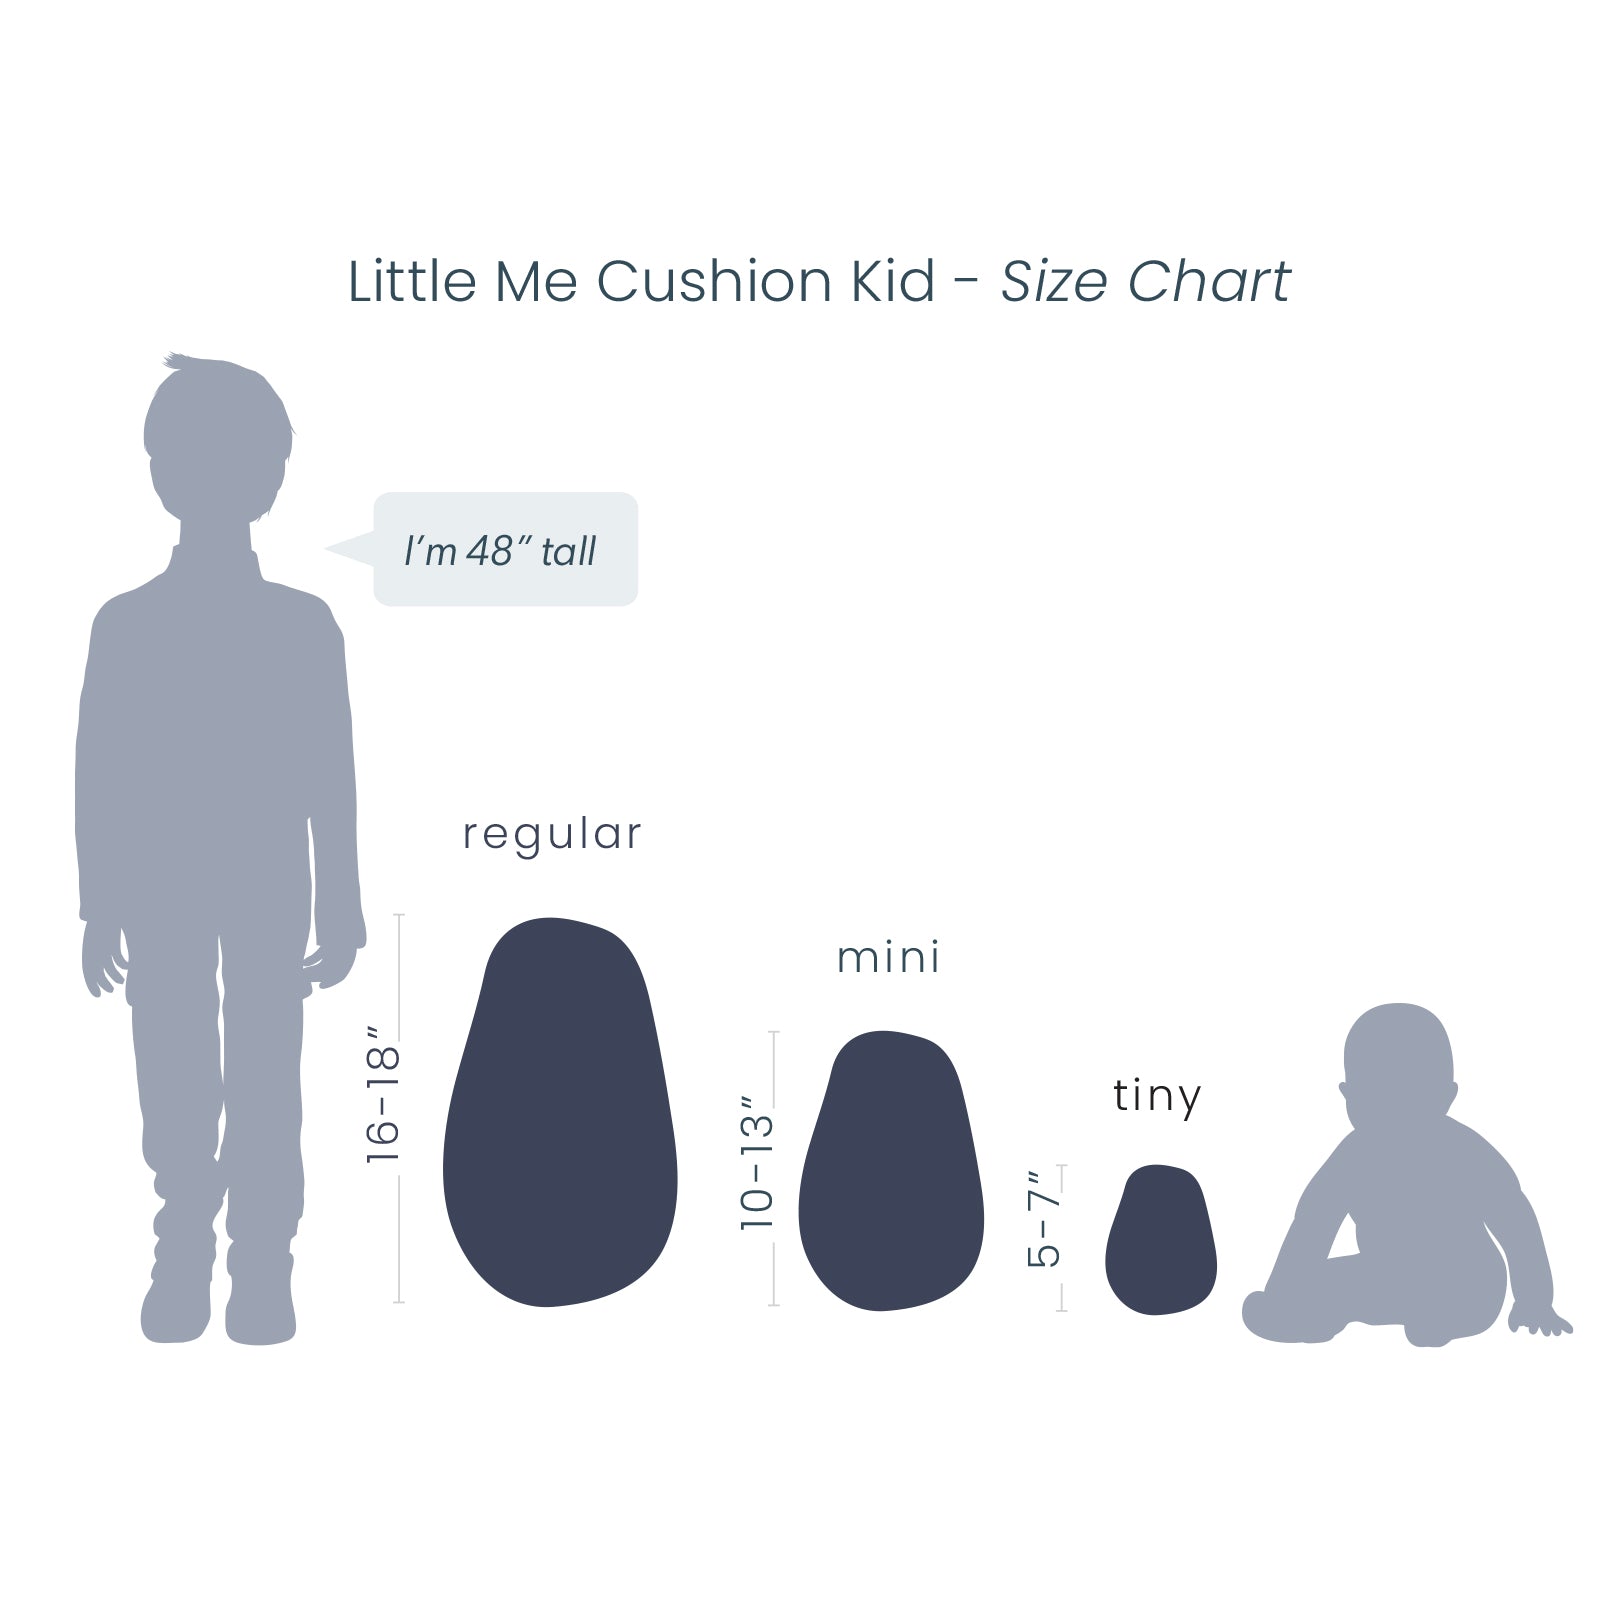 Cushion Kid size chart